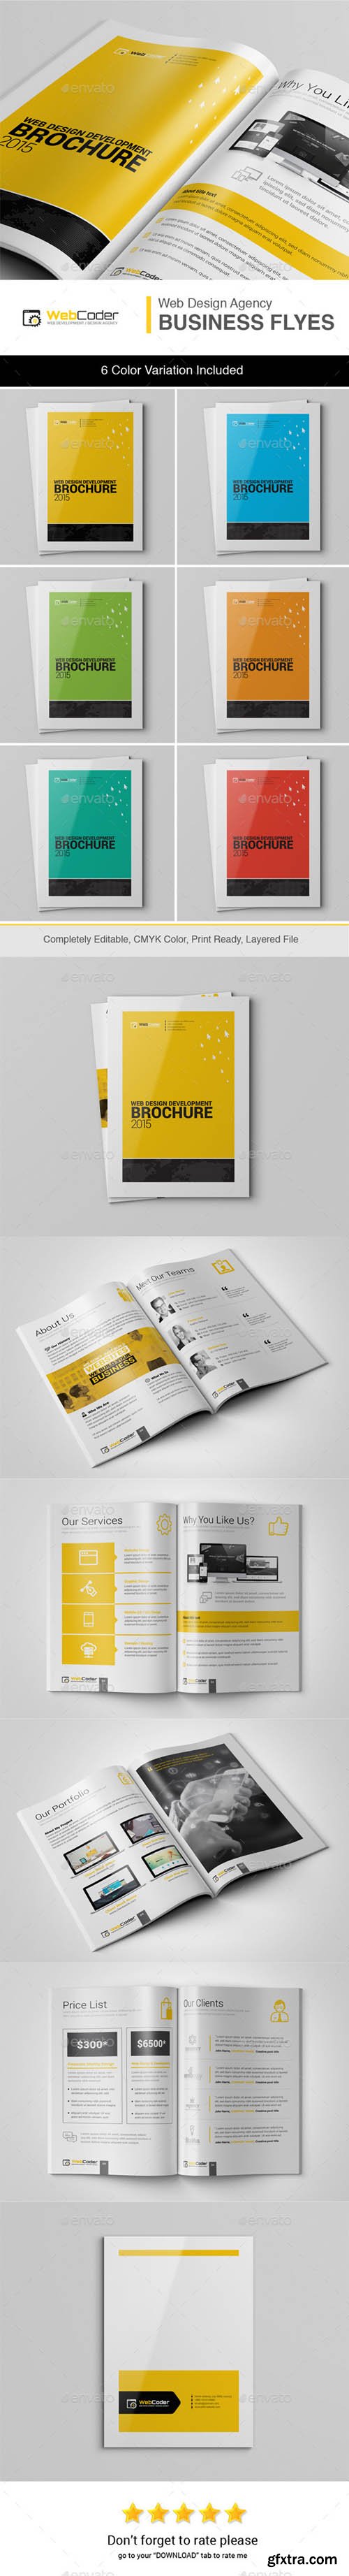 GR - Web Design & Development Agency Bi-Fold Brochure 12113715